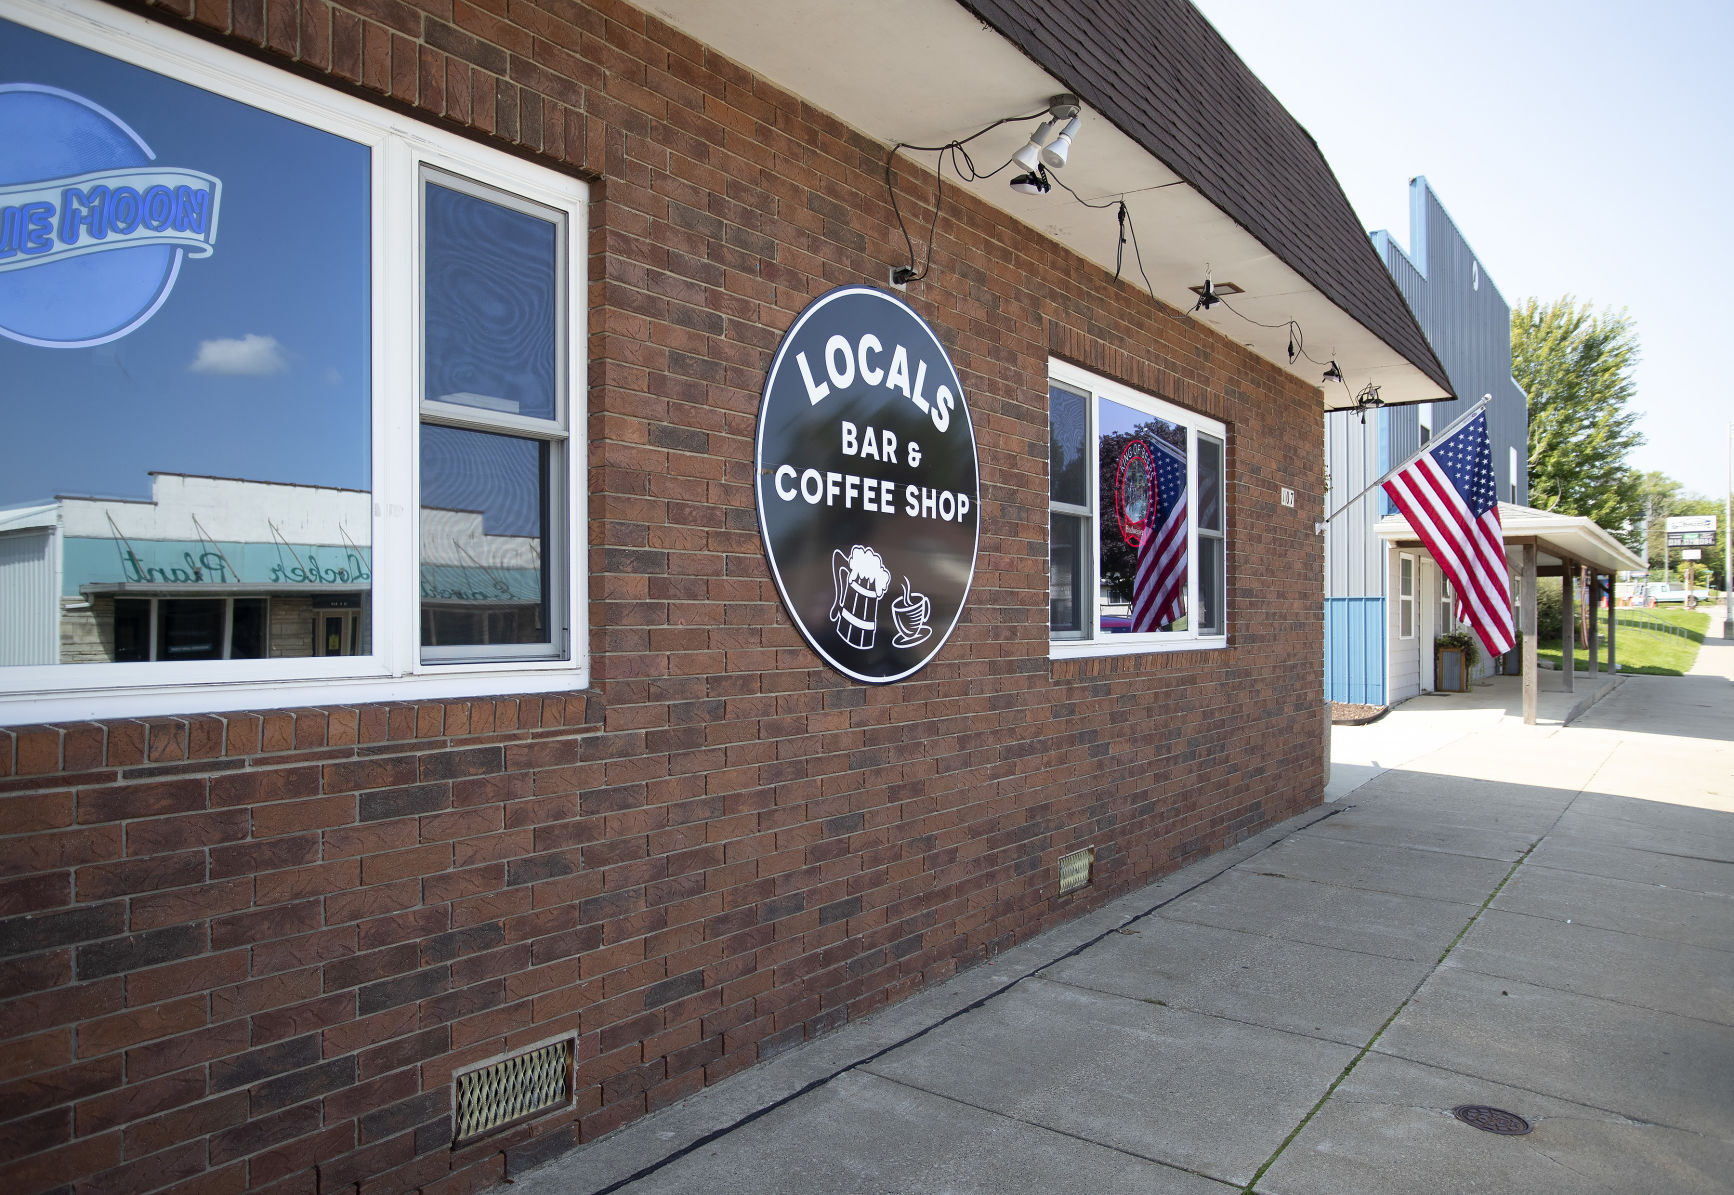 Locals Bar & Coffee Shop opened in May in Epworth, Iowa.    PHOTO CREDIT: Stephen Gassman